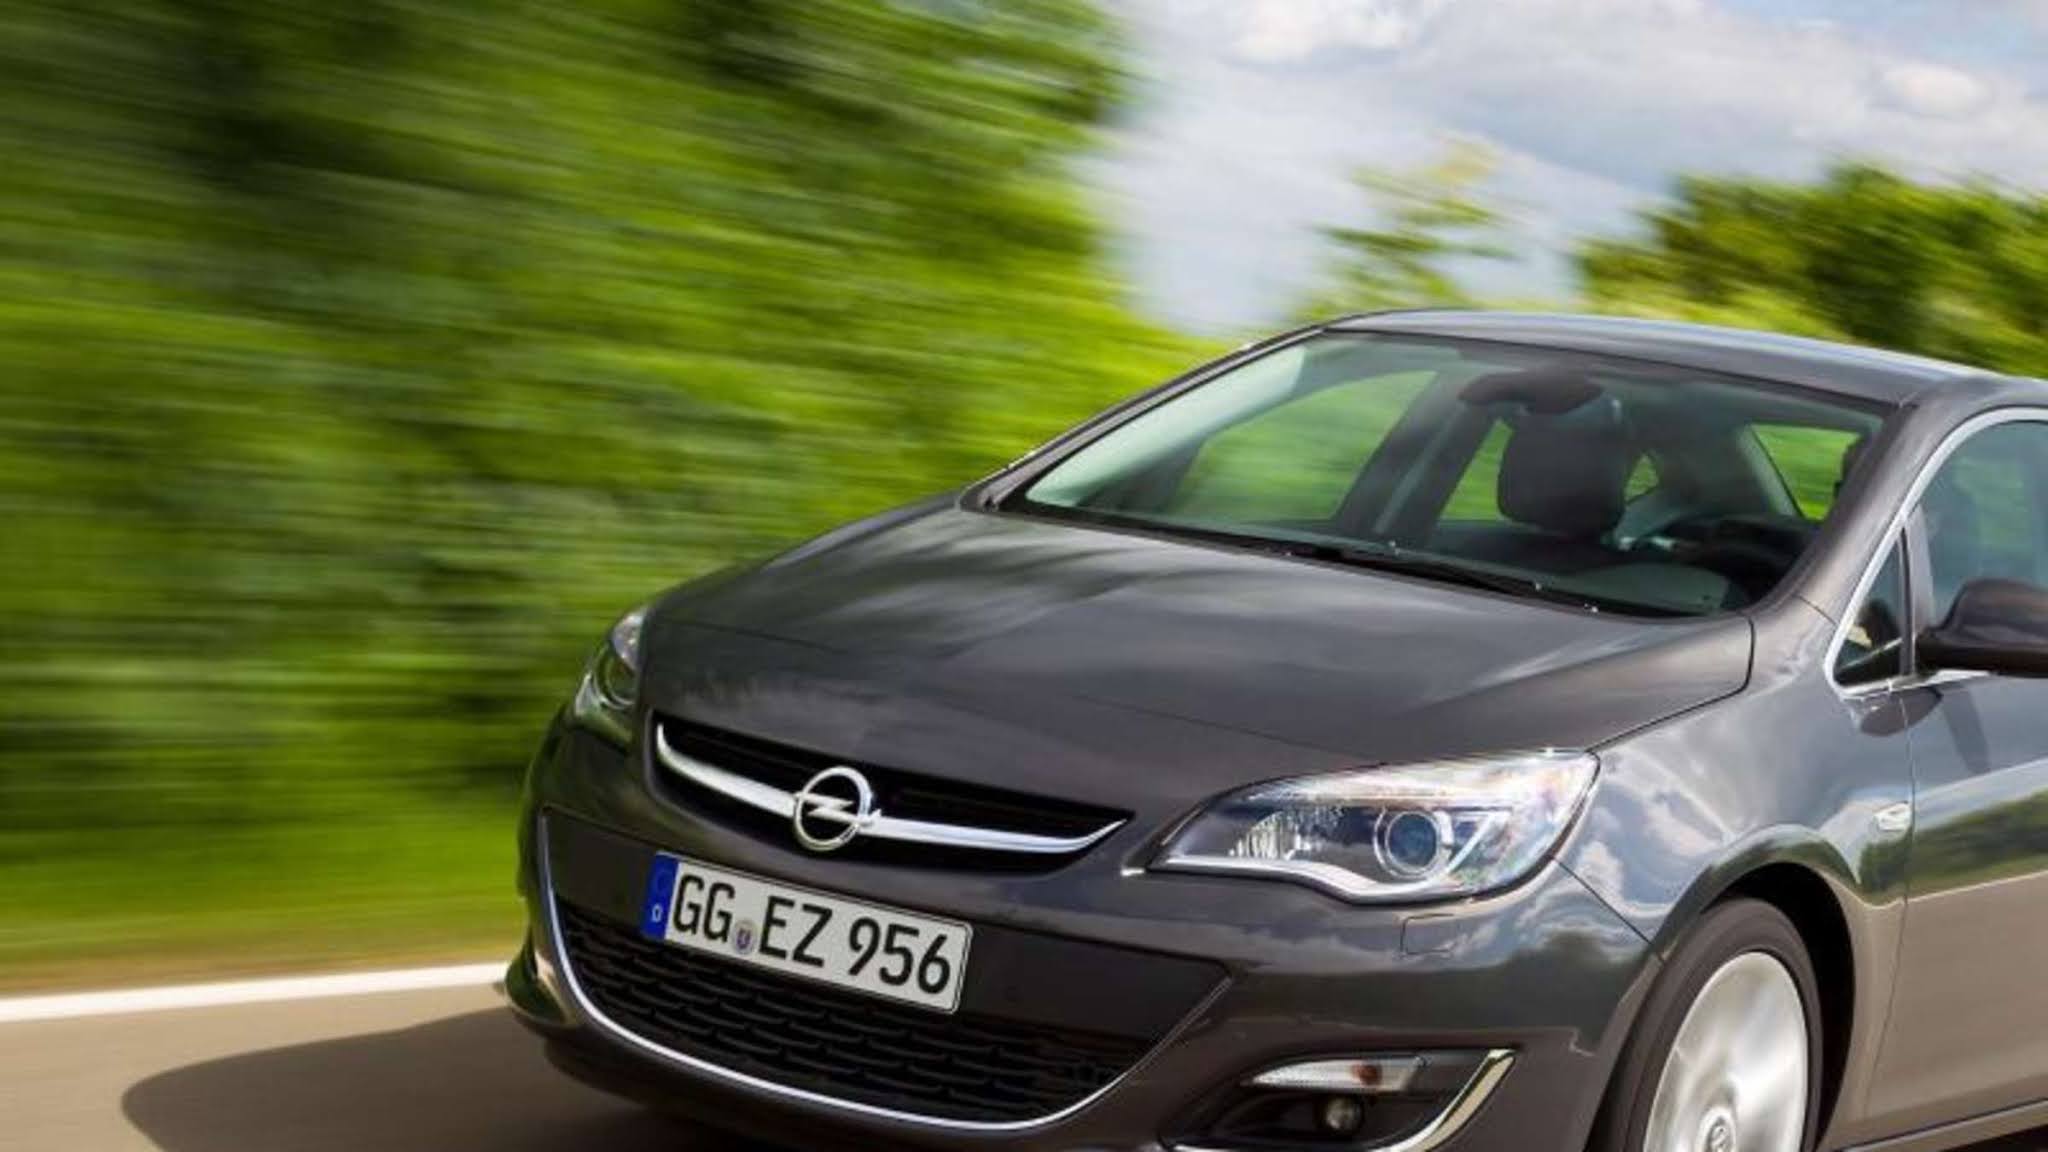 Opel Astra Workshop, Repair, Owners Service Manuals PDF Download